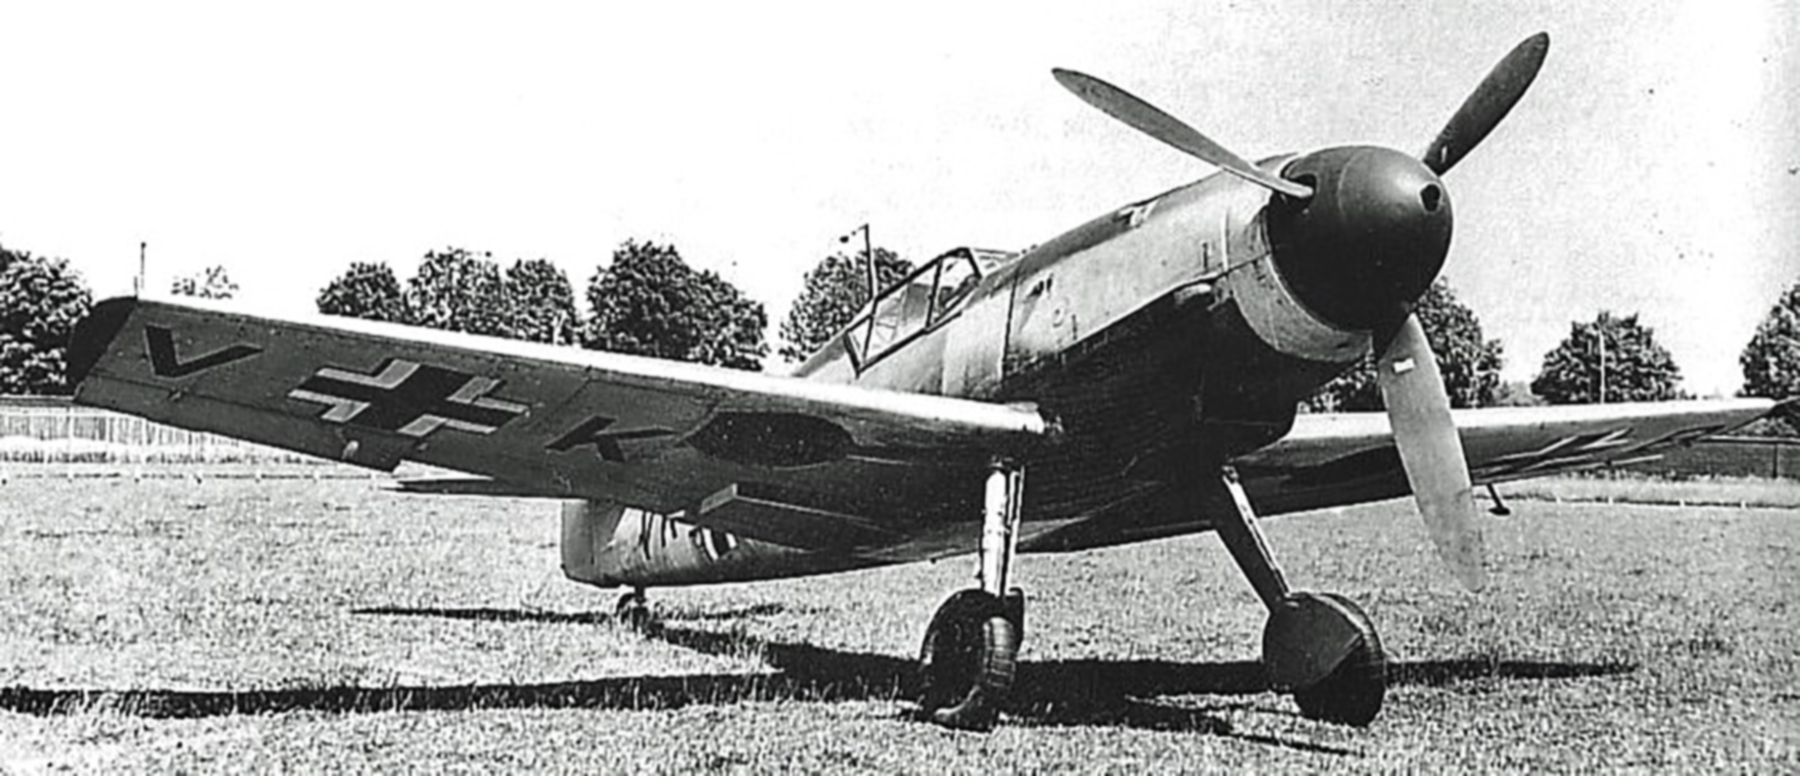 Messerschmitt Bf 109V24 F4 Stkz VK+AB first D ITDH V 24 WNr 1929 later rebuild to F 04 CE+BH with WNr 5604 02